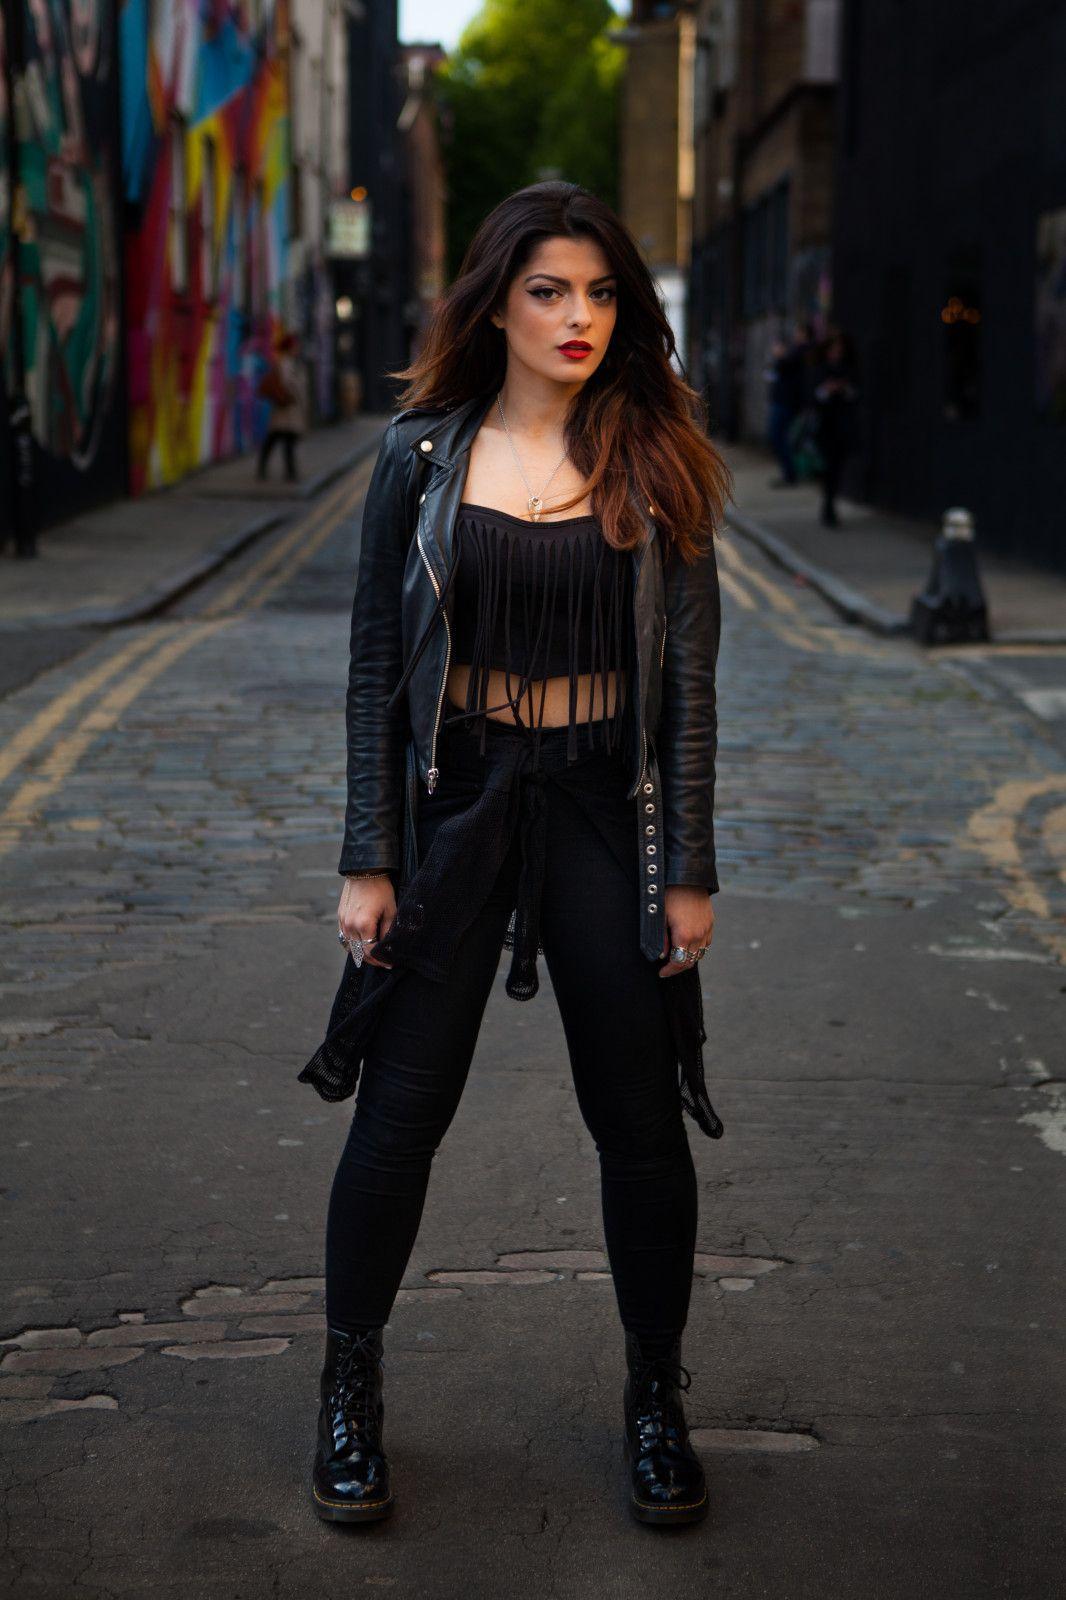 Bebe Rexha Malhotra Photohoot. Celebrities In Leather